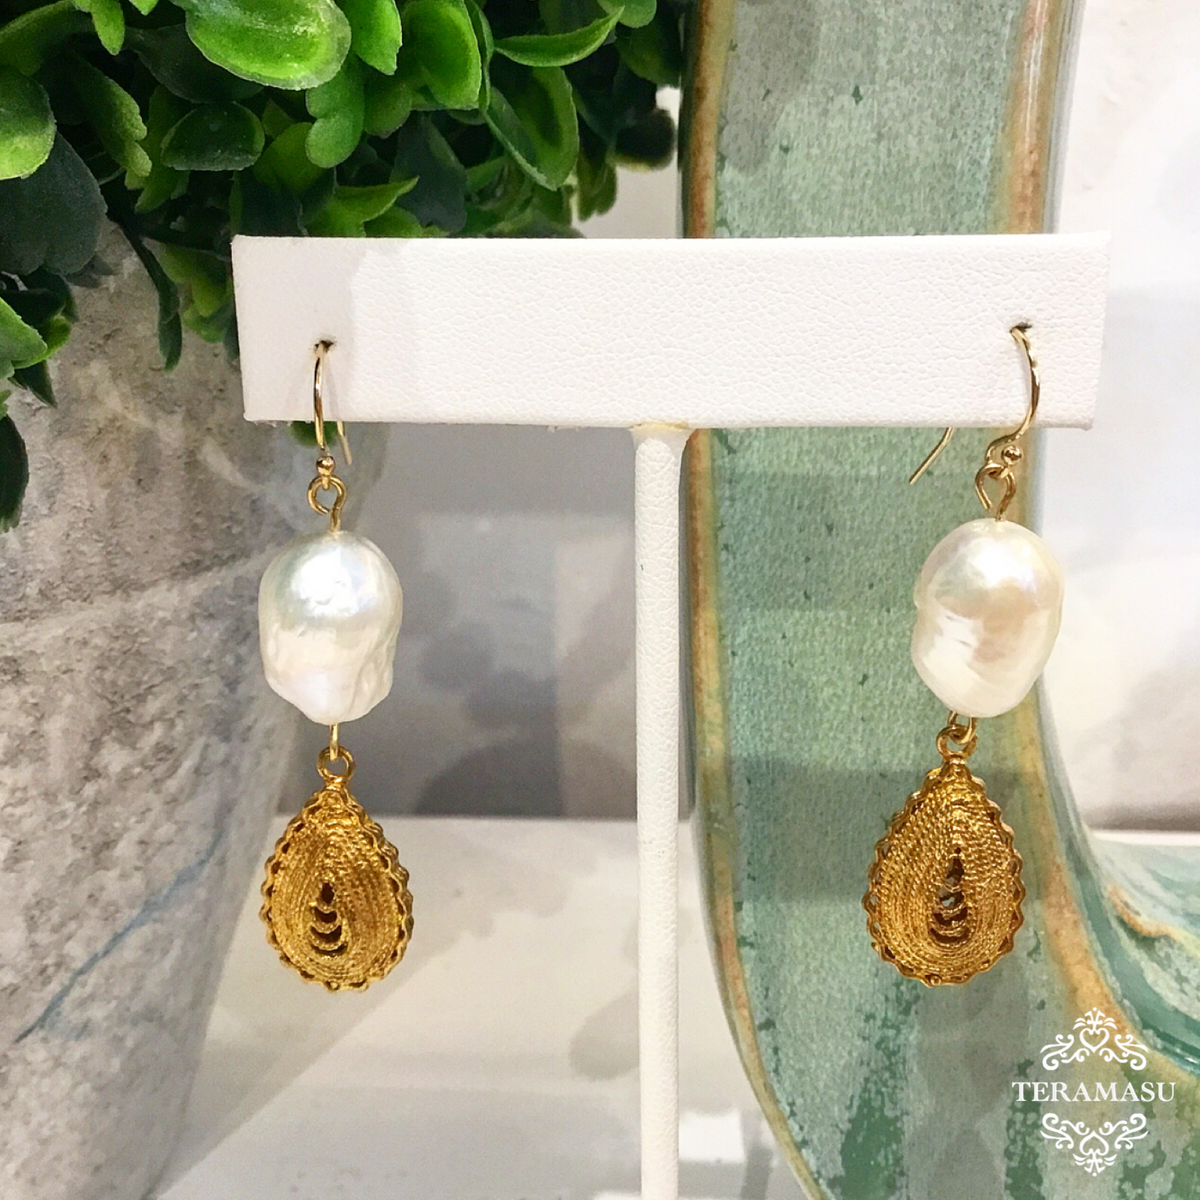 Chic Peek: Gorgeous & New Teramasu Baroque Pearl and Gold Teardrop Earrings